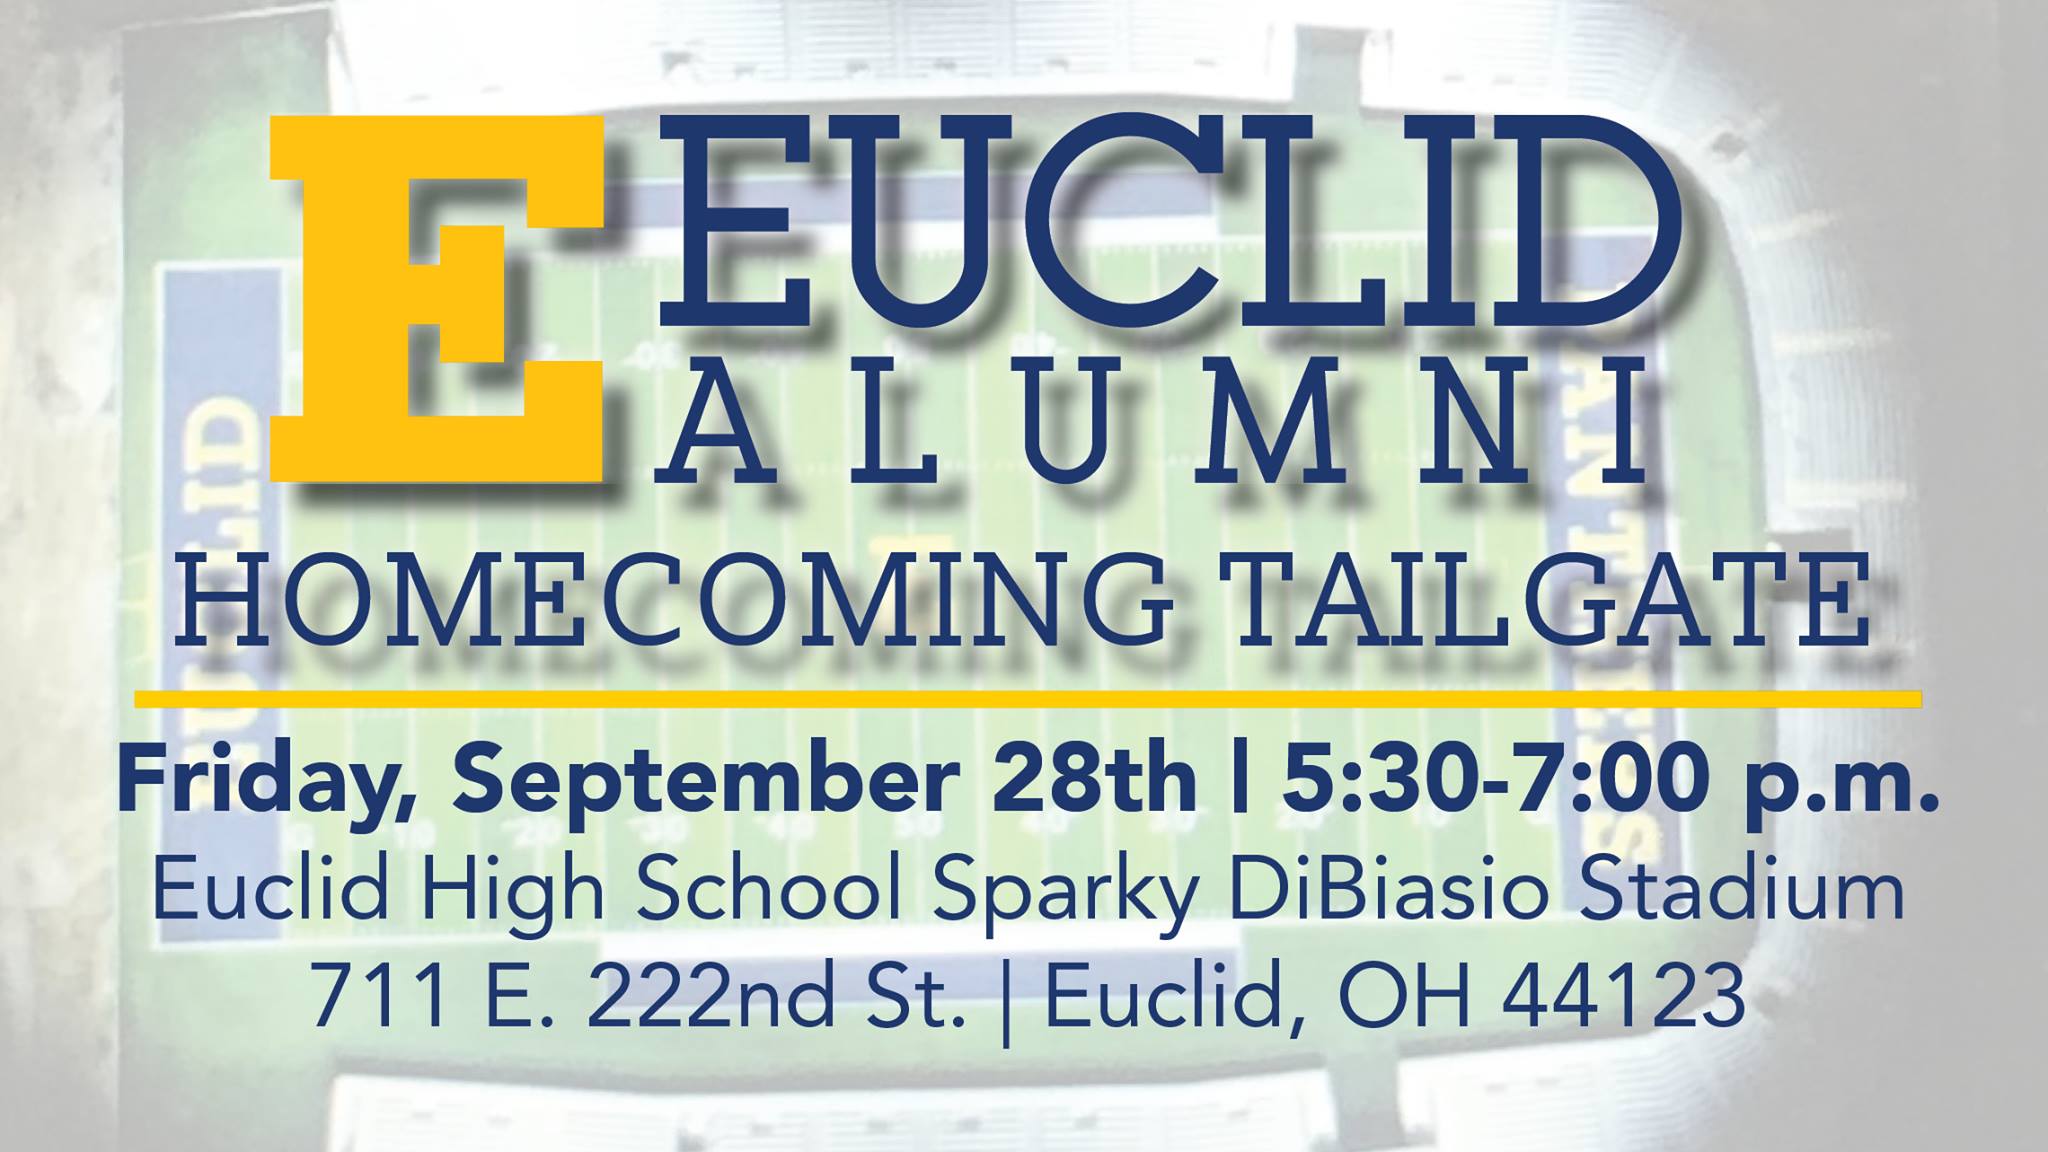 2018 Euclid Alumni Homecoming Tailgate Cover Photo